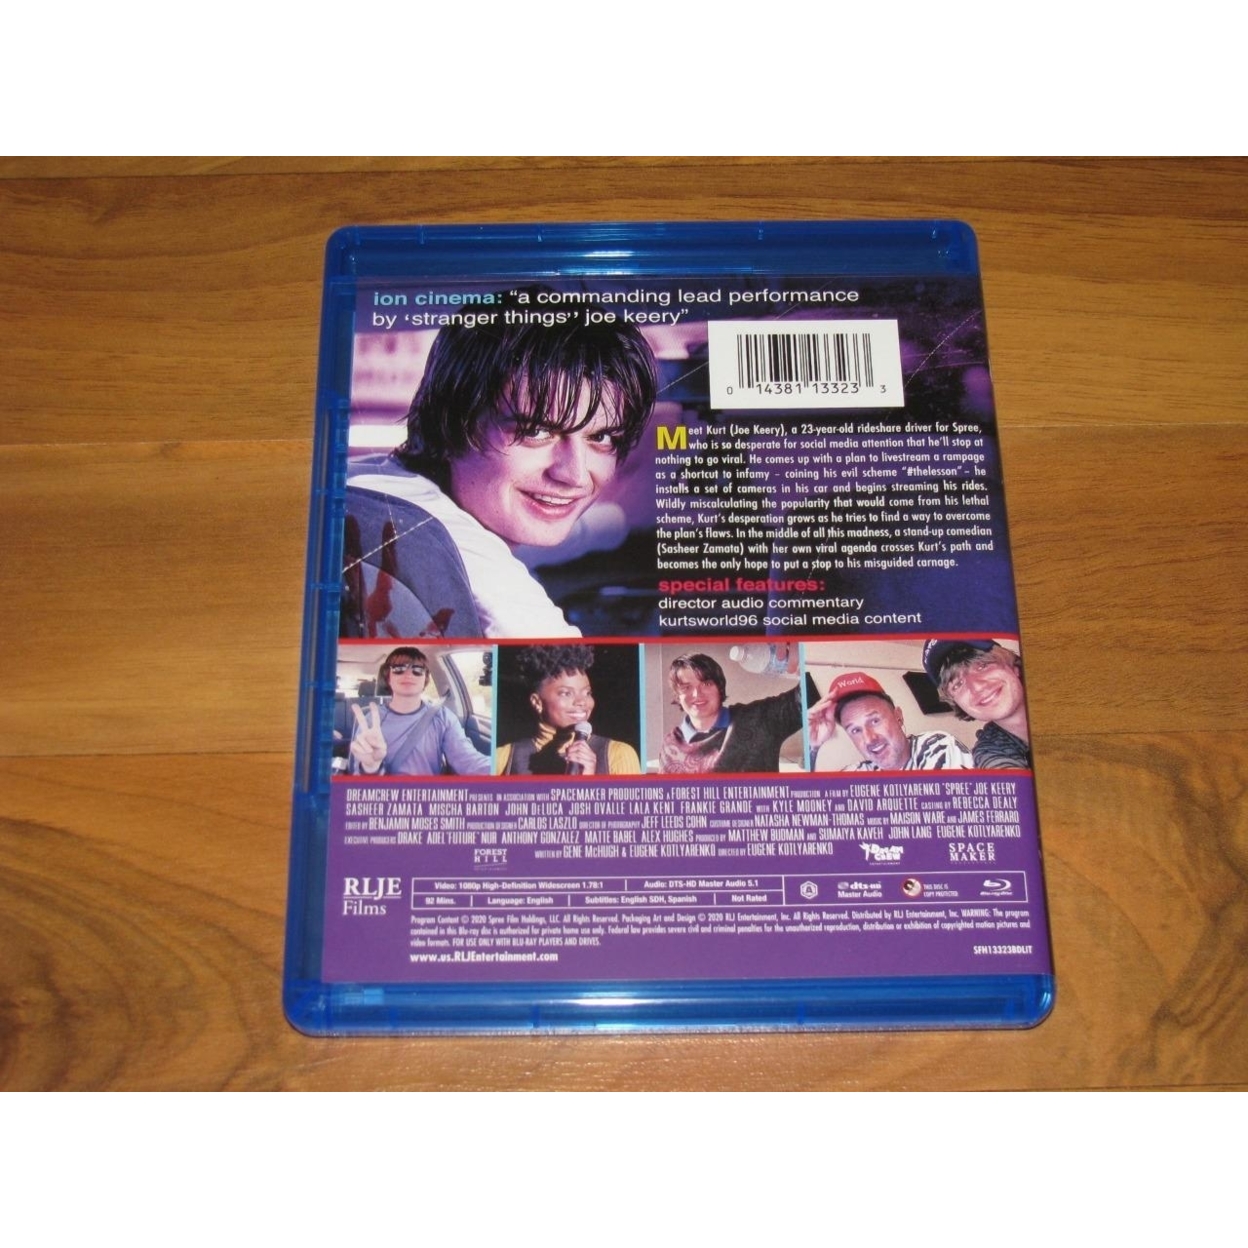 Spree (Blu-ray), Image Entertainment, Mystery & Suspense - image 3 of 3